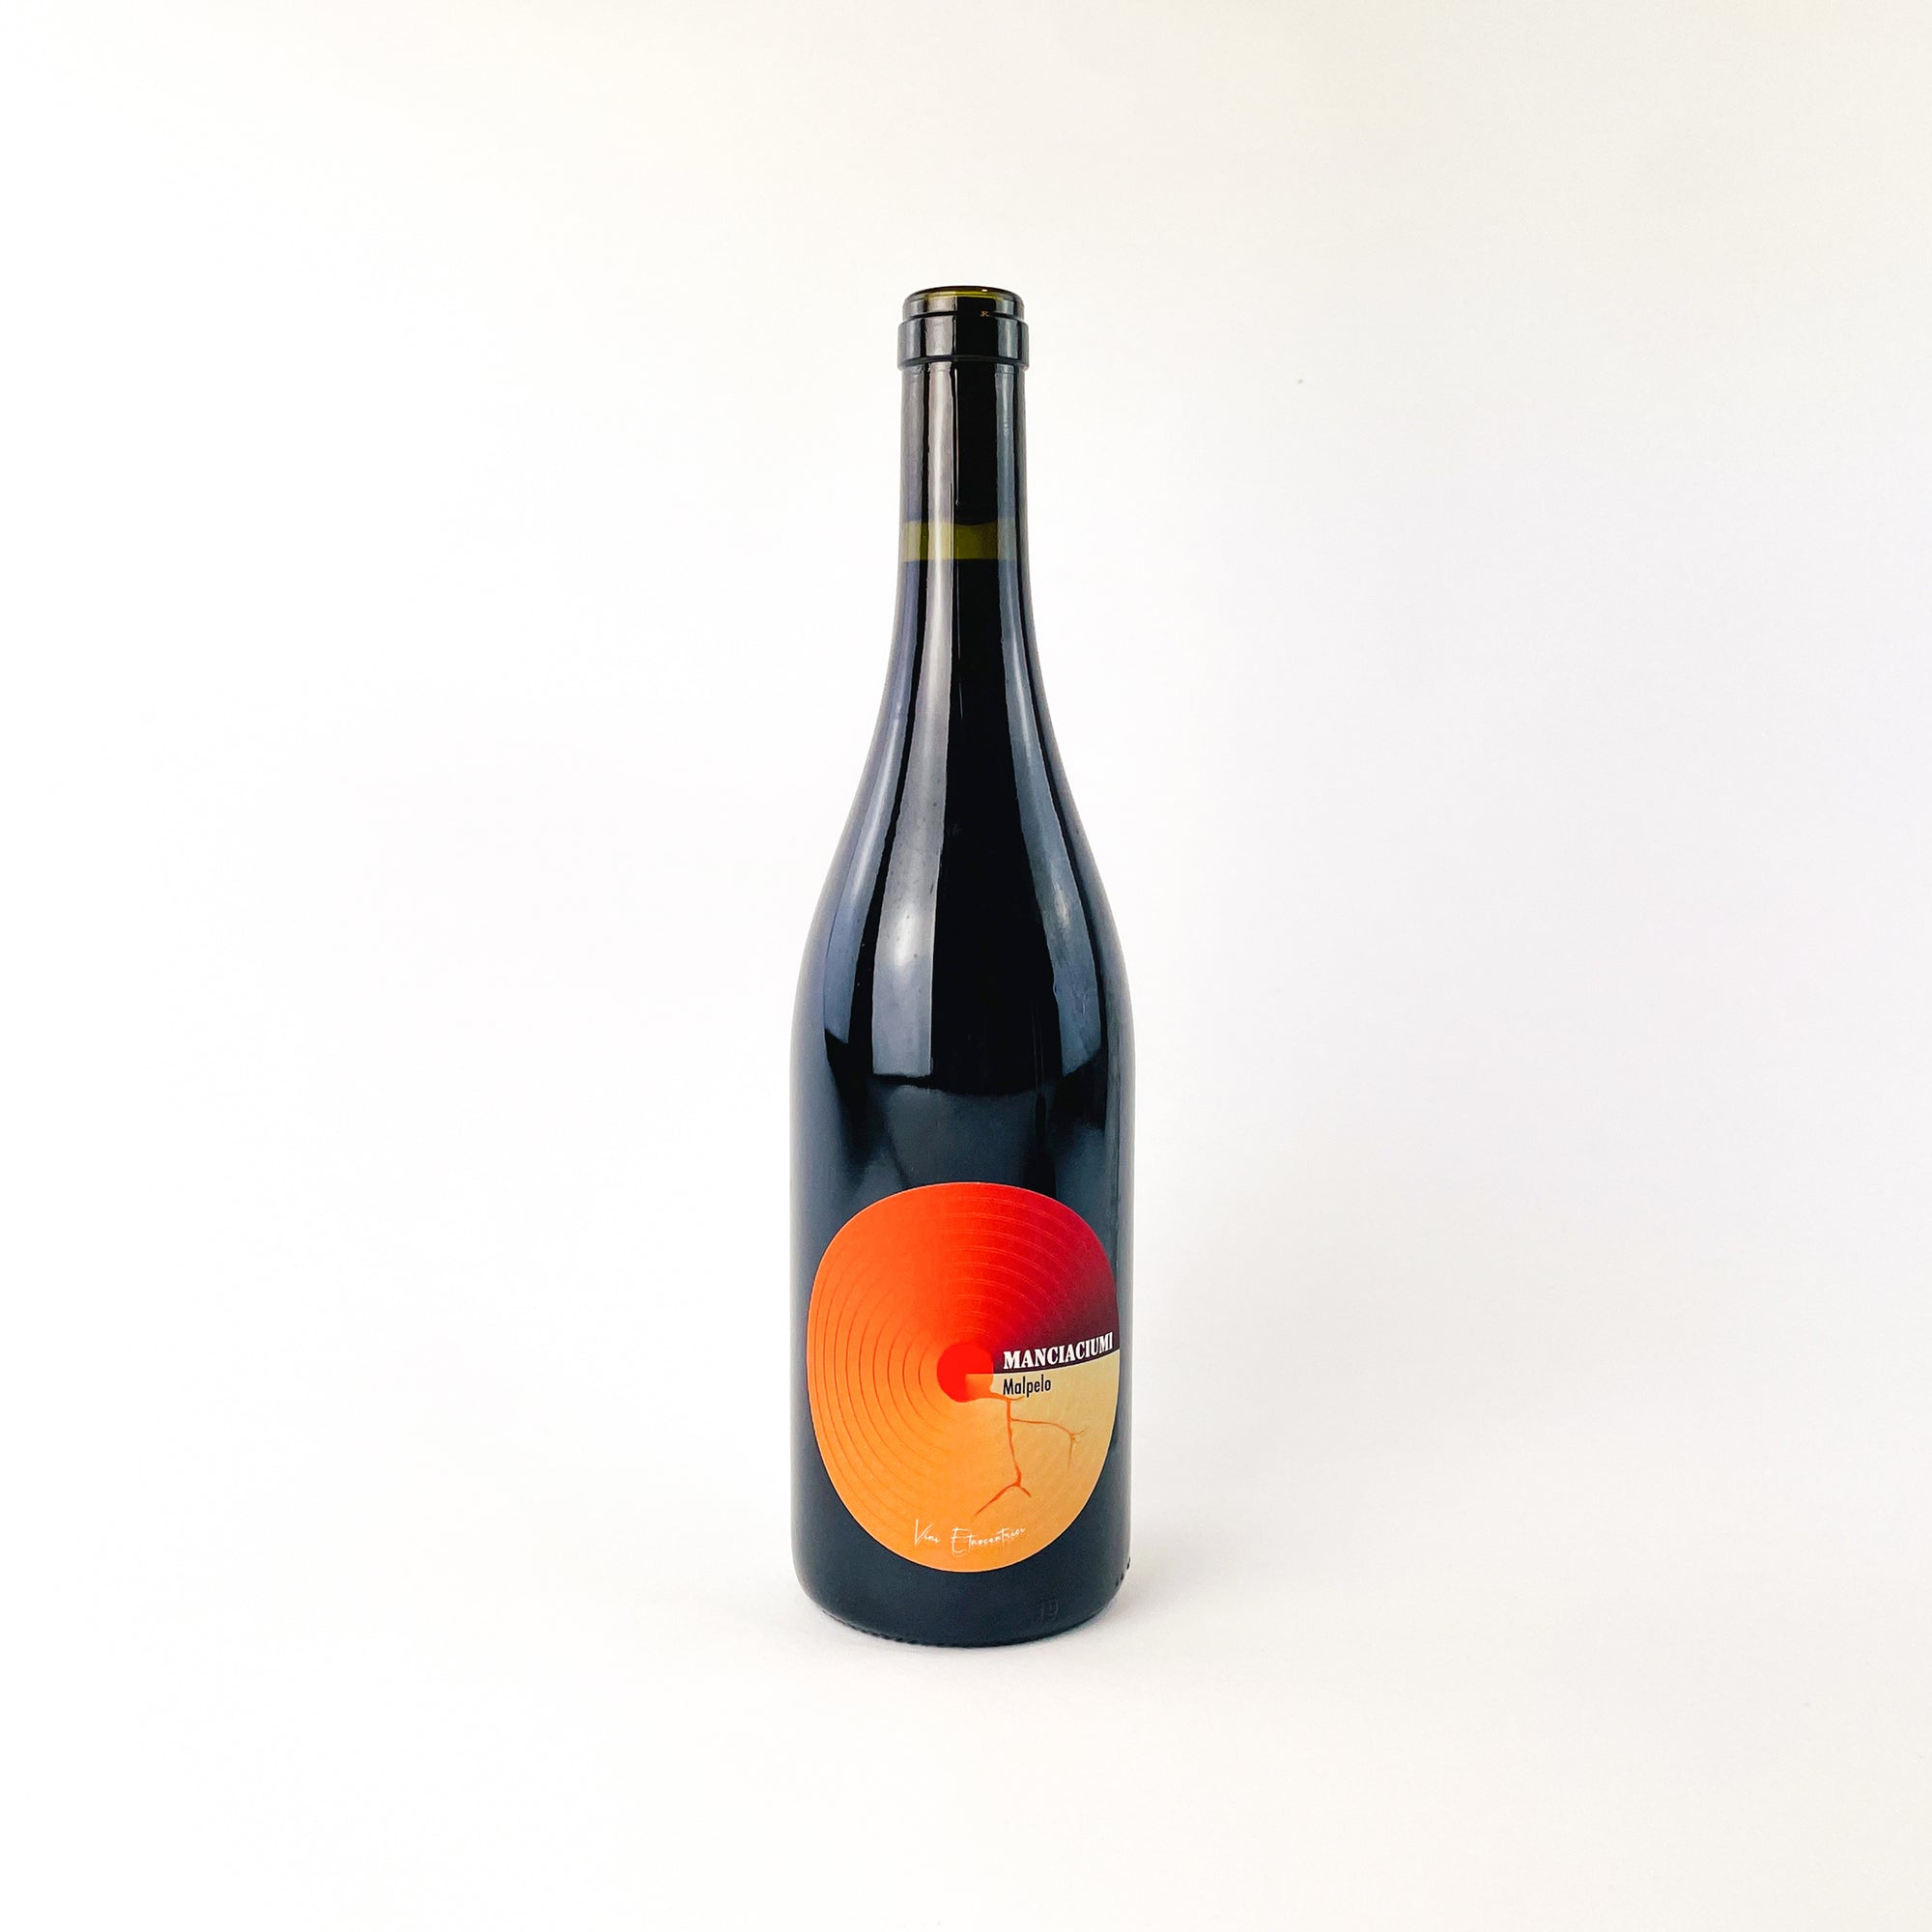 Manciaciumi, Malpelo, red wine bottle, Sicily natural wine